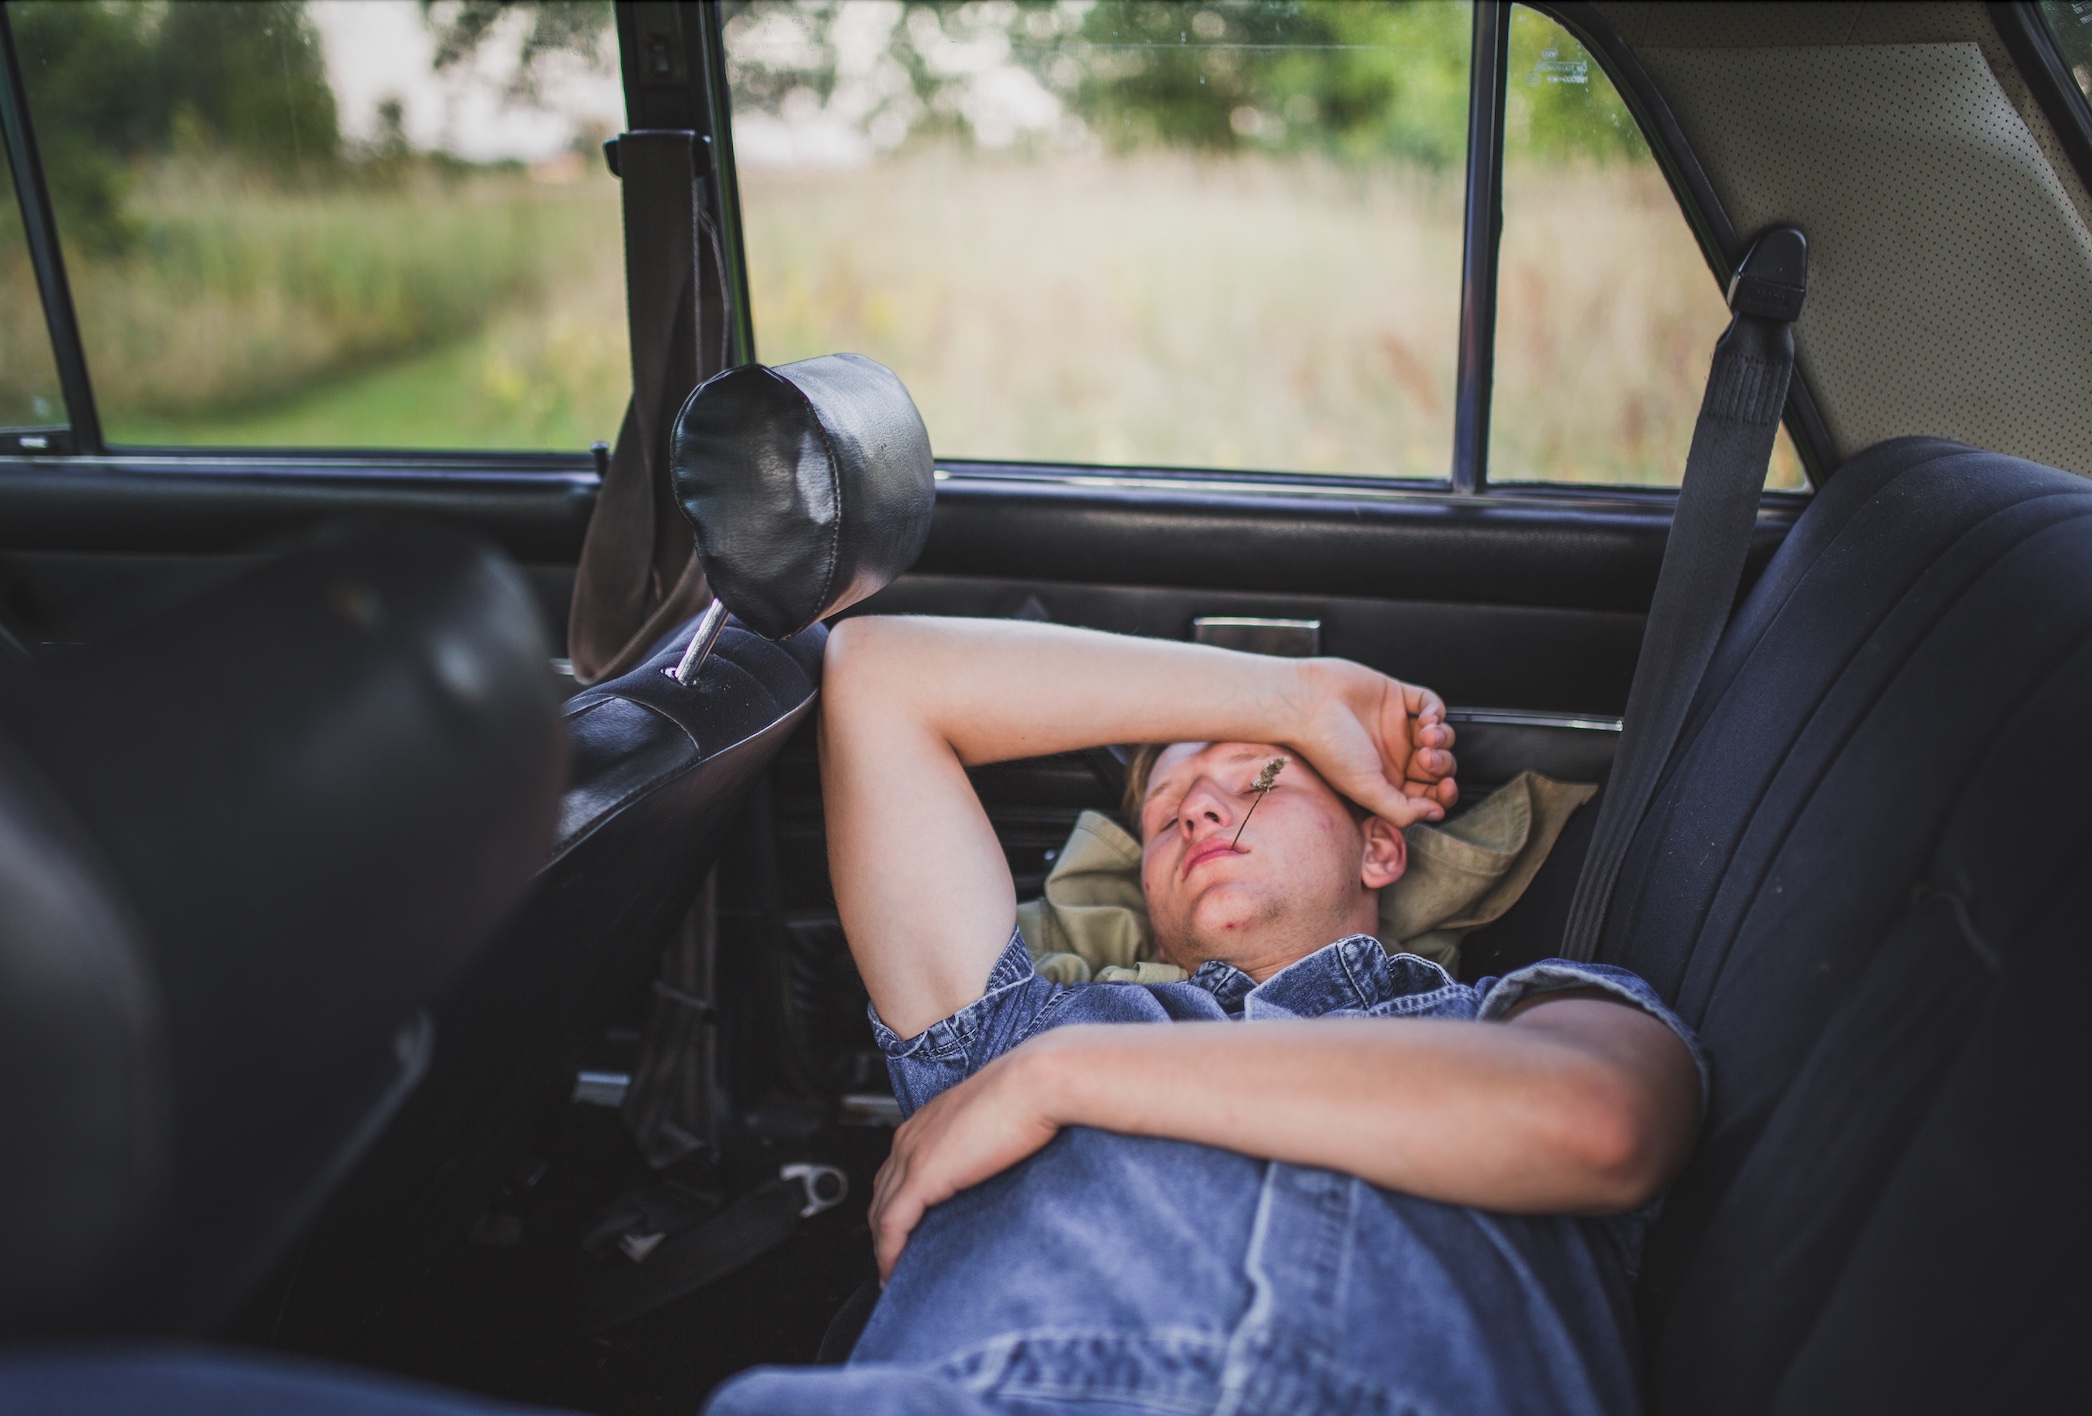 Young man sleeping in back of car; image by Elvis Bekmanis, via Unsplash.com.